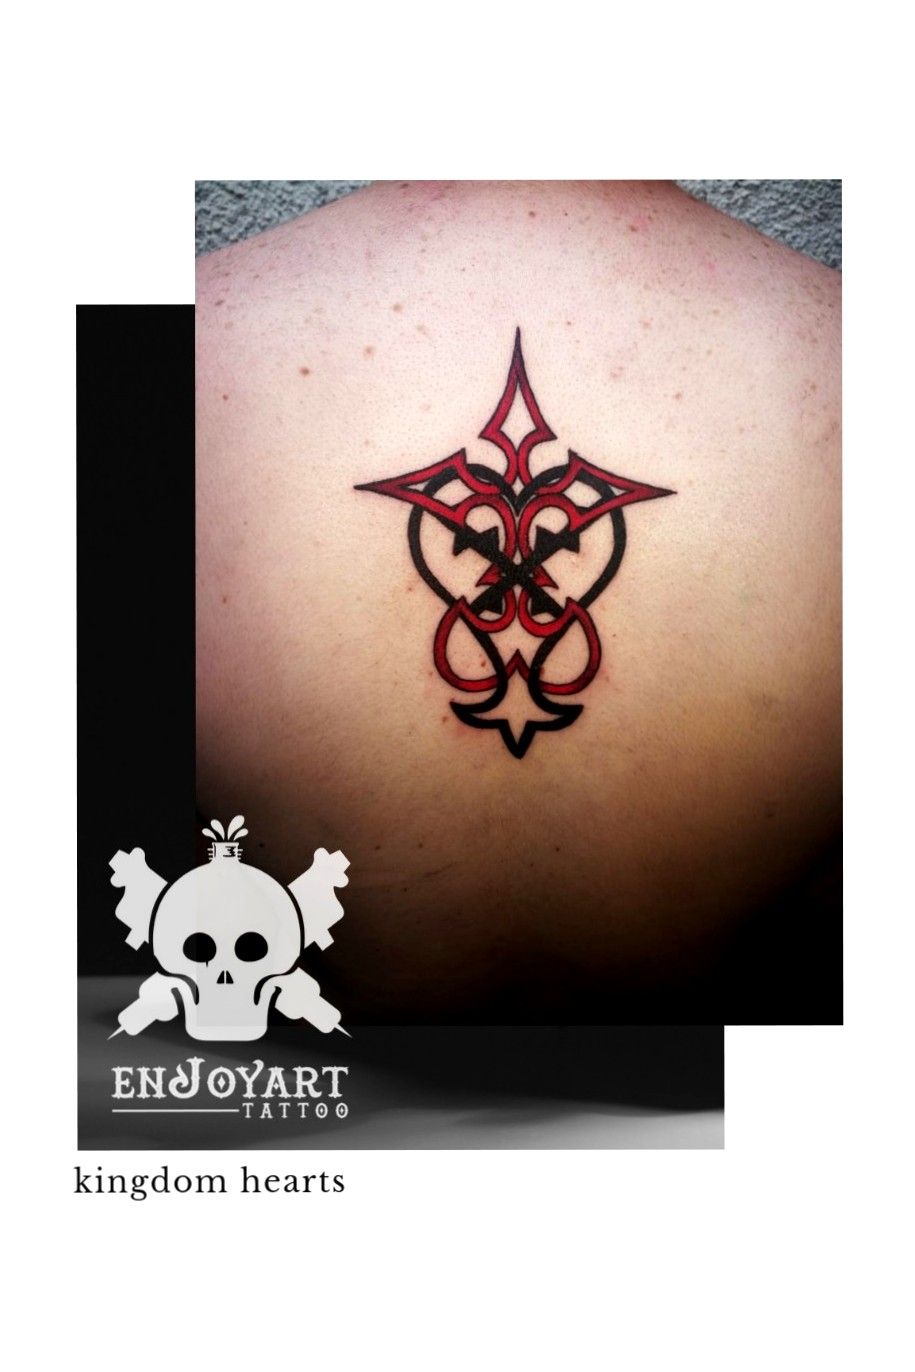 The Raddest Kingdom Hearts Tattoos Ever  SMOSH  Heart tattoo designs Kingdom  hearts tattoo Tattoo designs